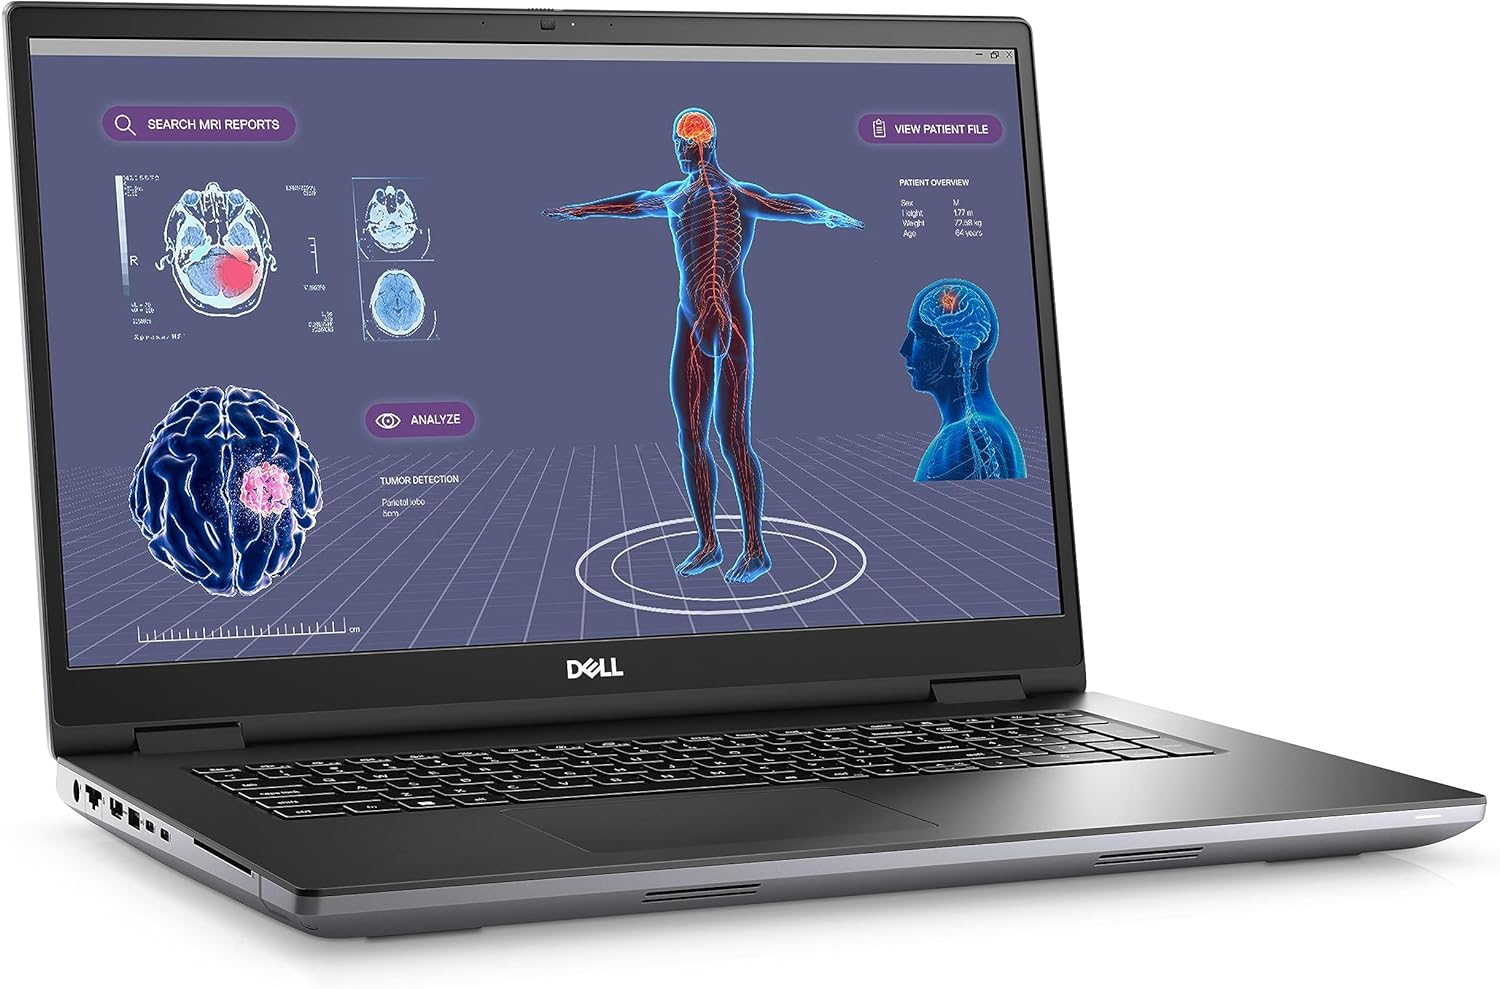 Dell Precision 7000 Workstation Laptop Review